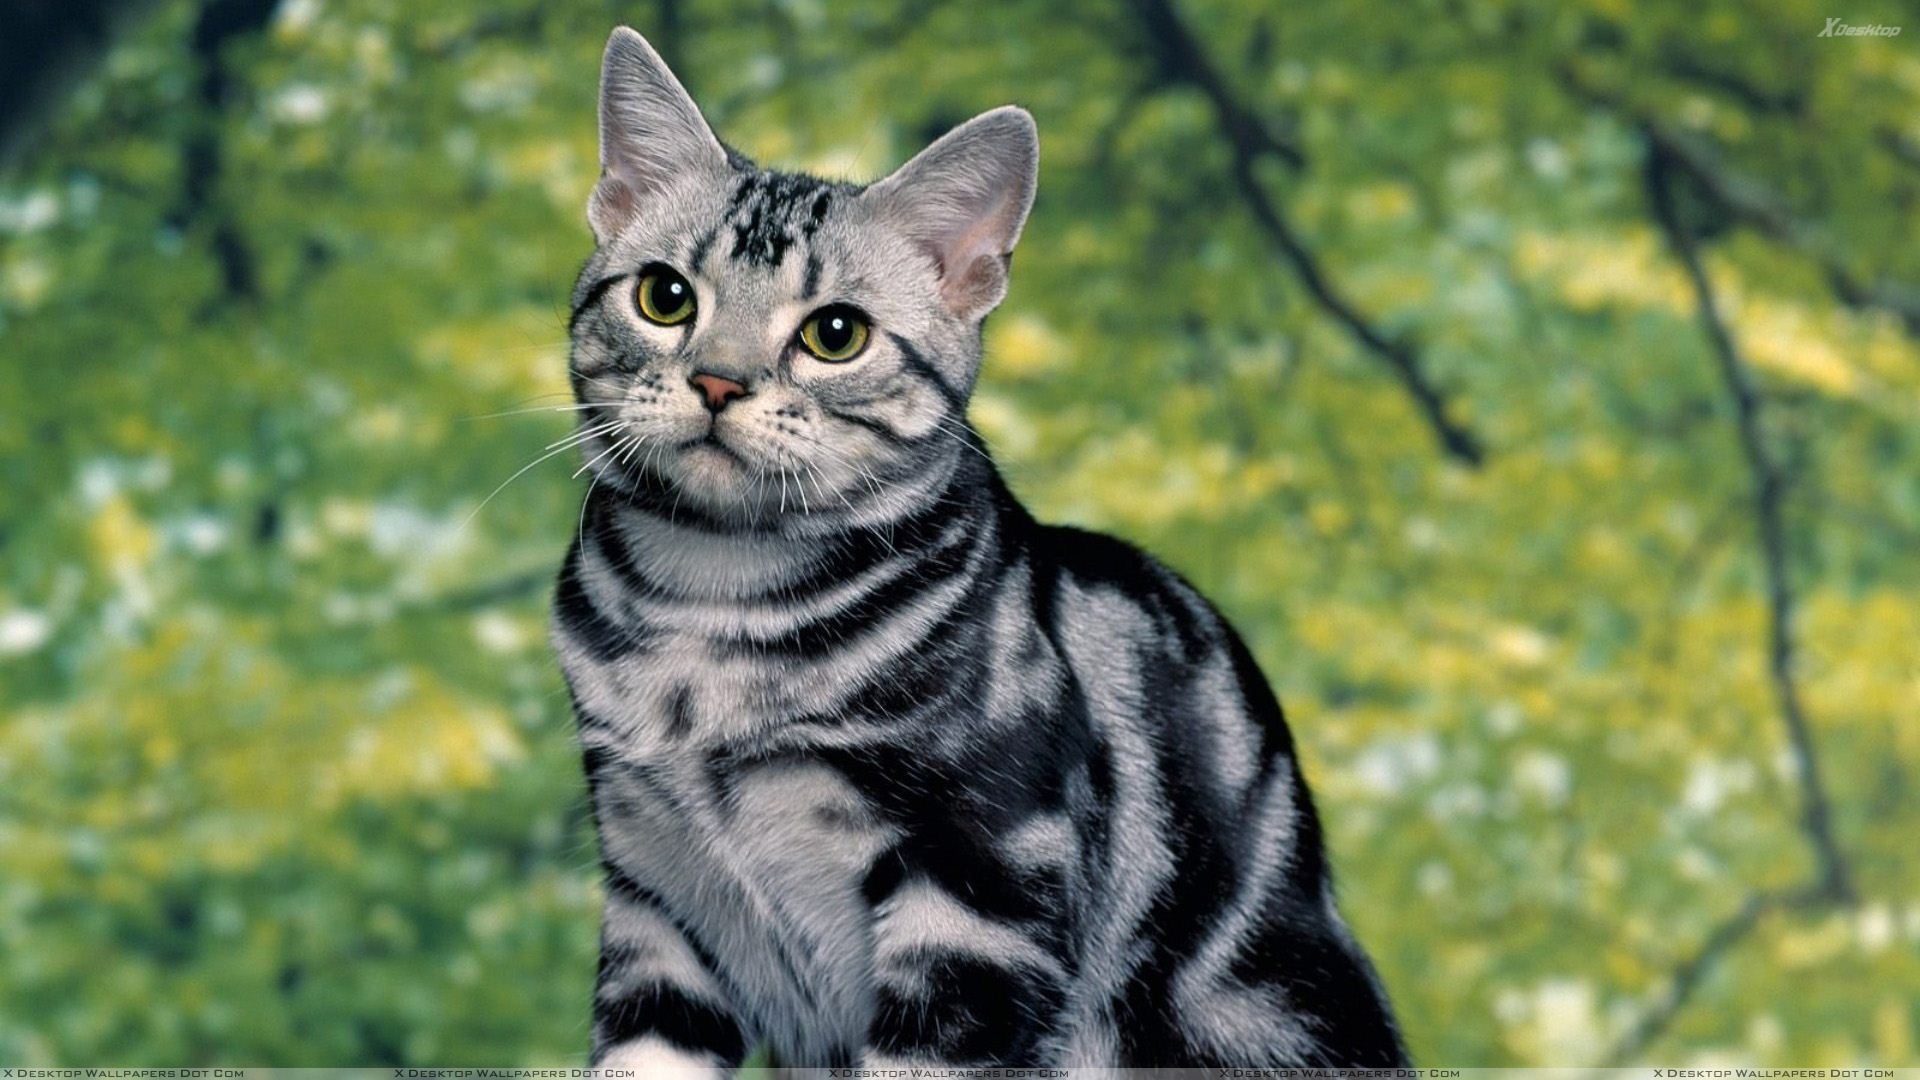 Mobile Desktop Background Cat And Kittens Images Download